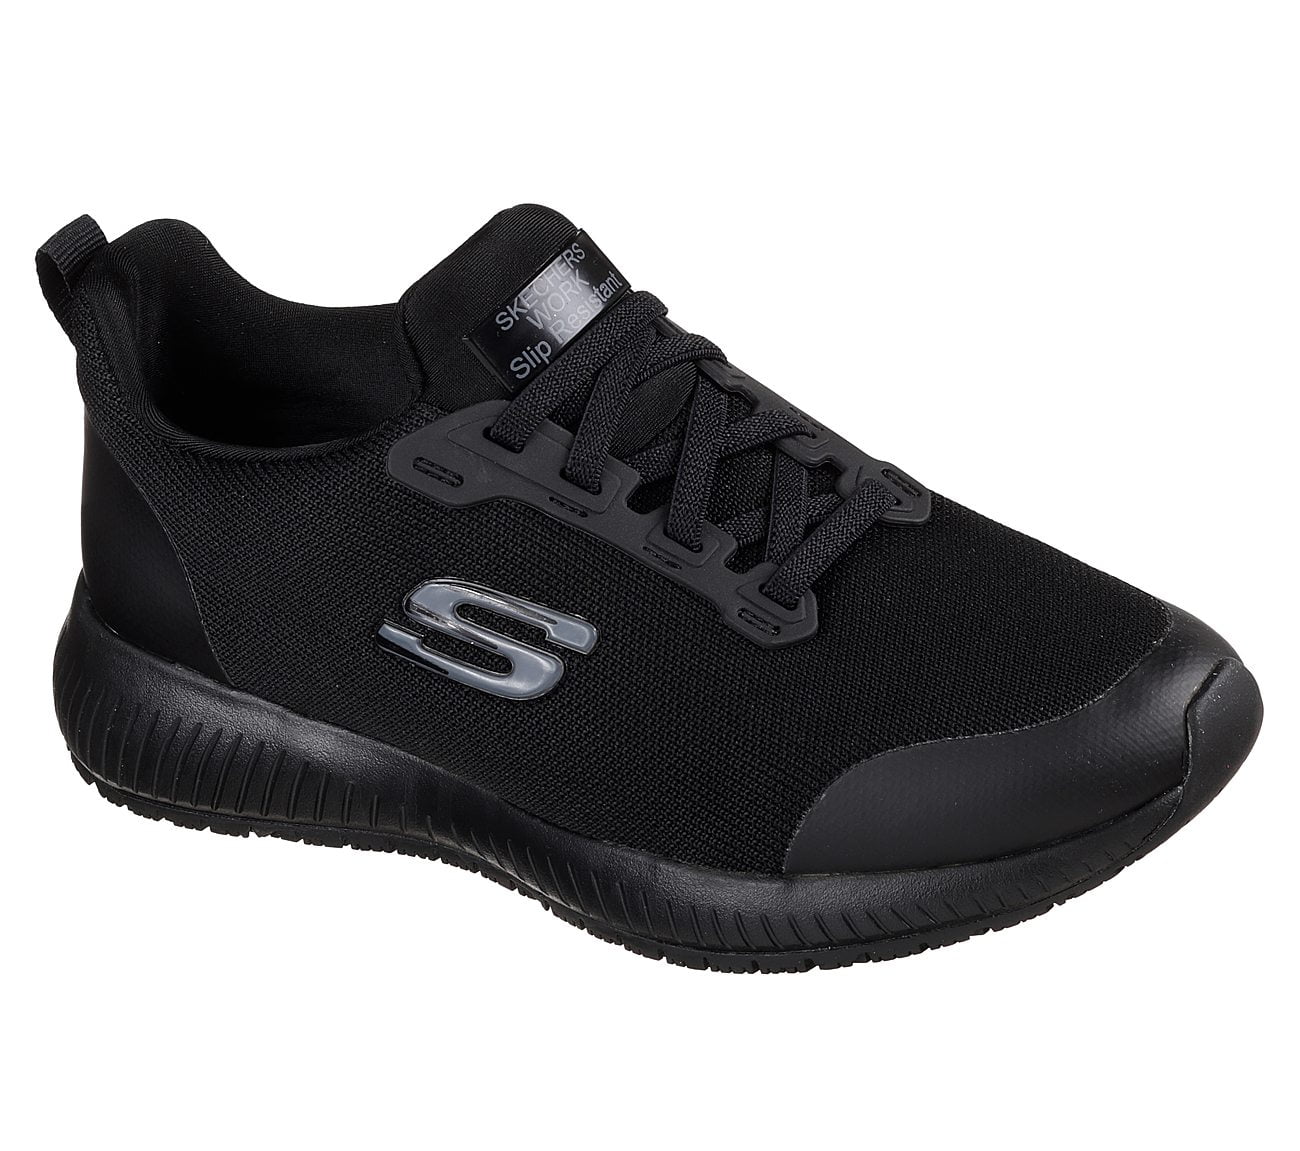 Squad Slip Resistant Athletic Shoe 